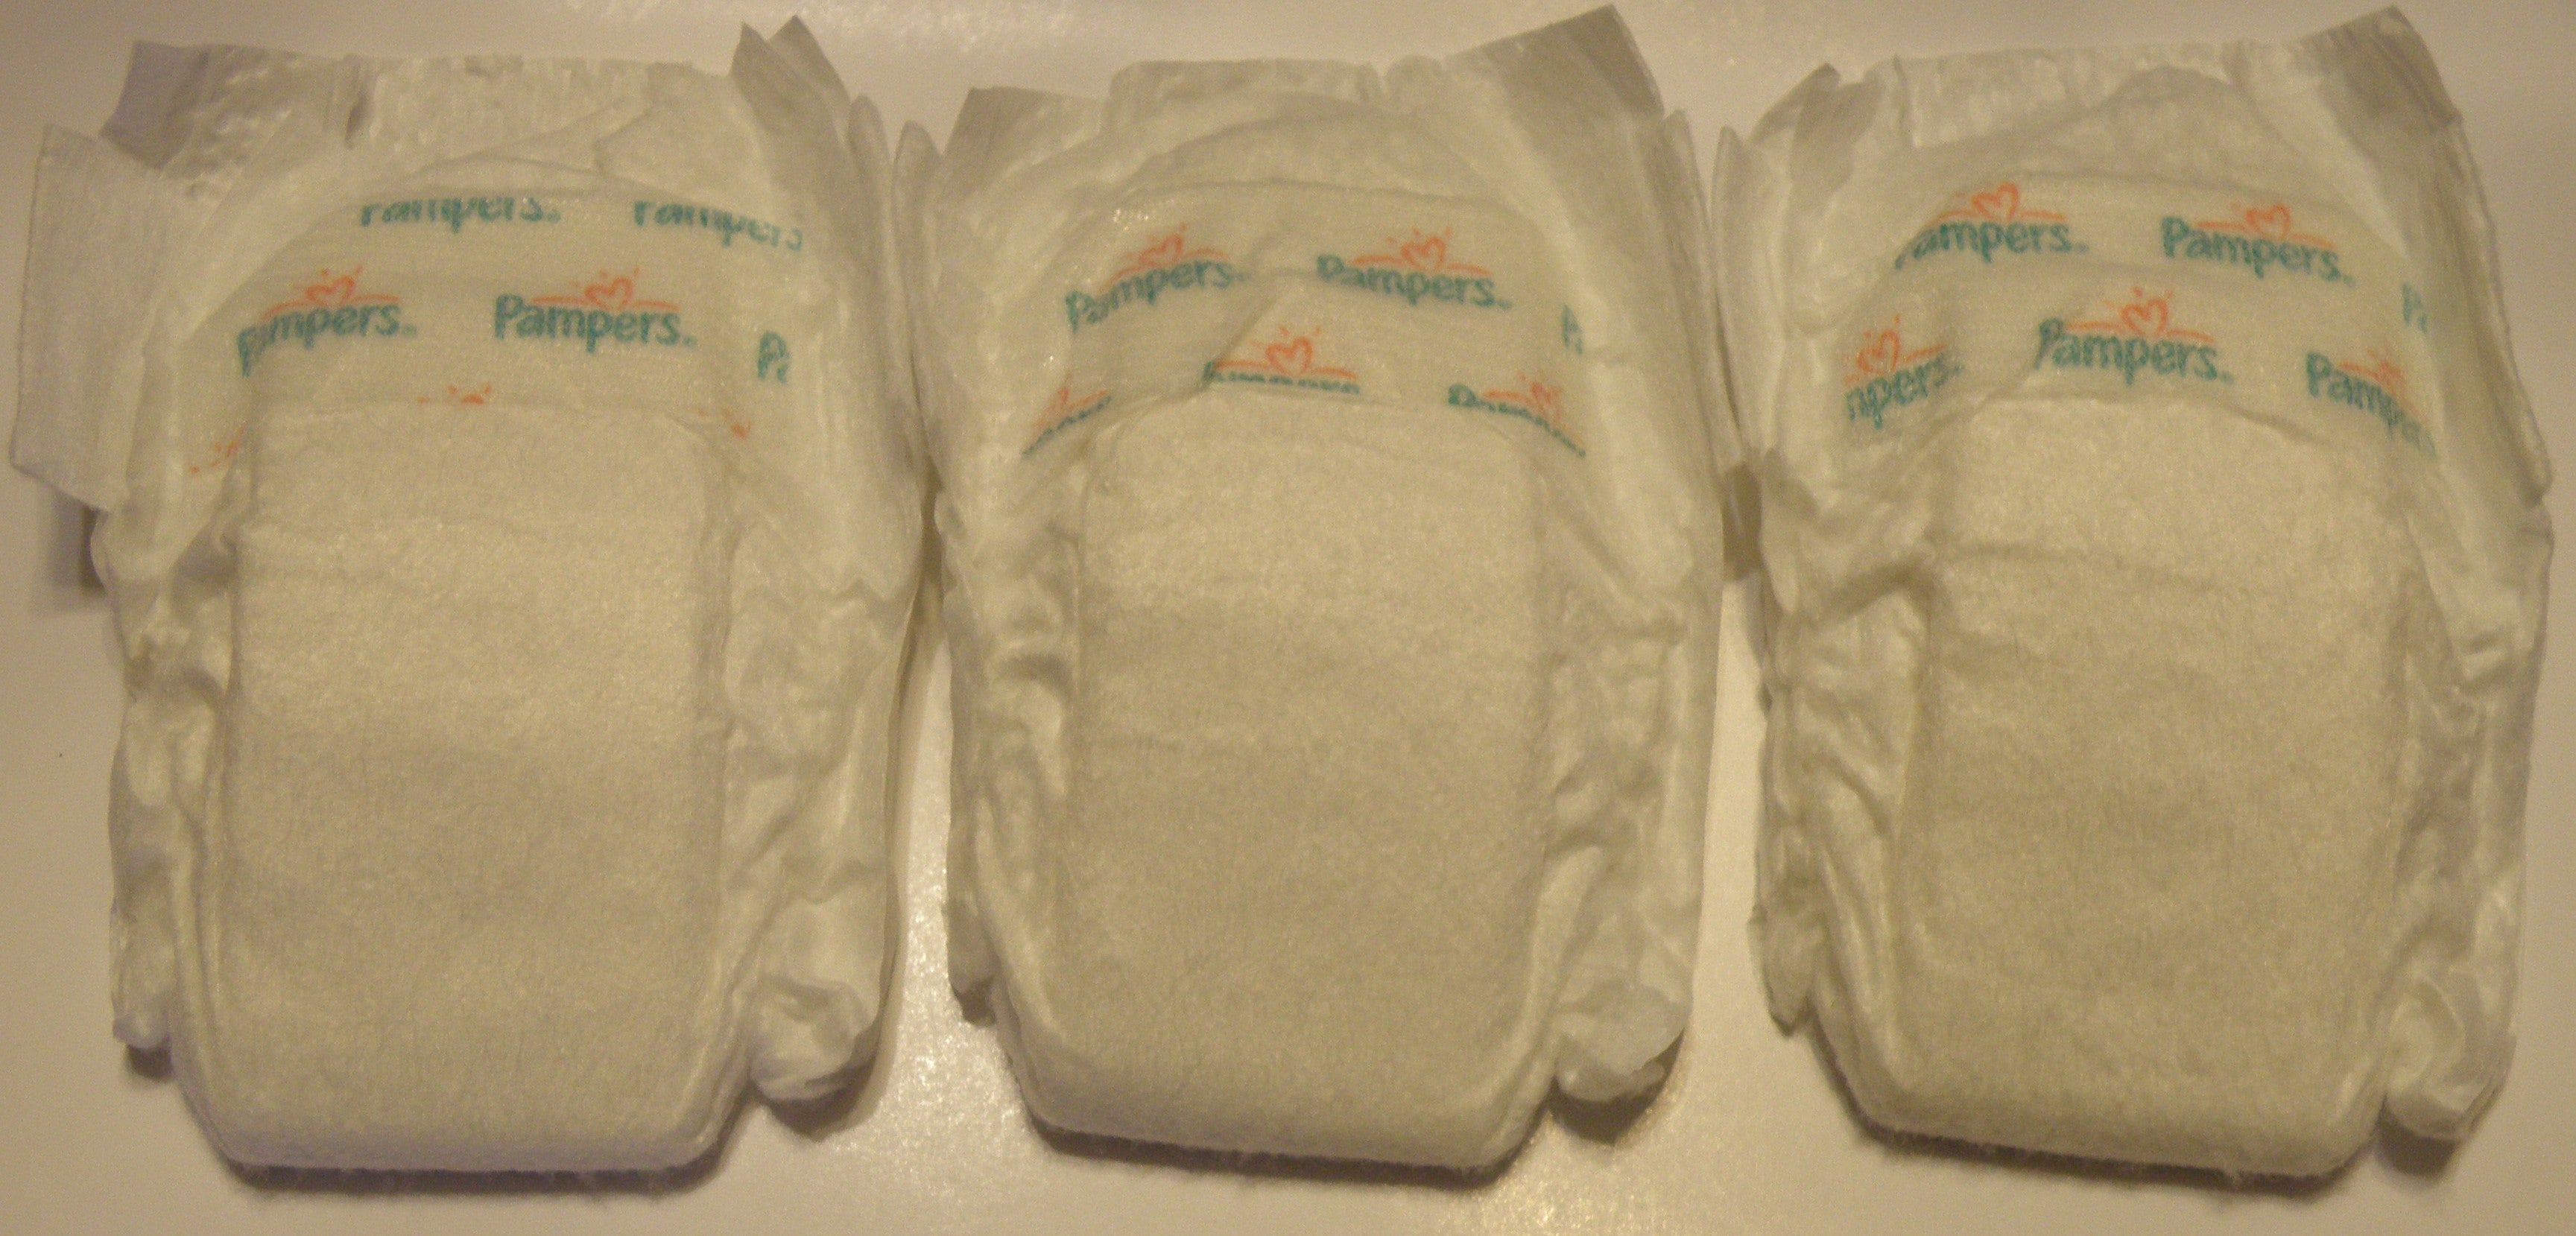 3 Preemie Xs Pampers Diapers for Babies Reborn and Ooak Baby Dolls